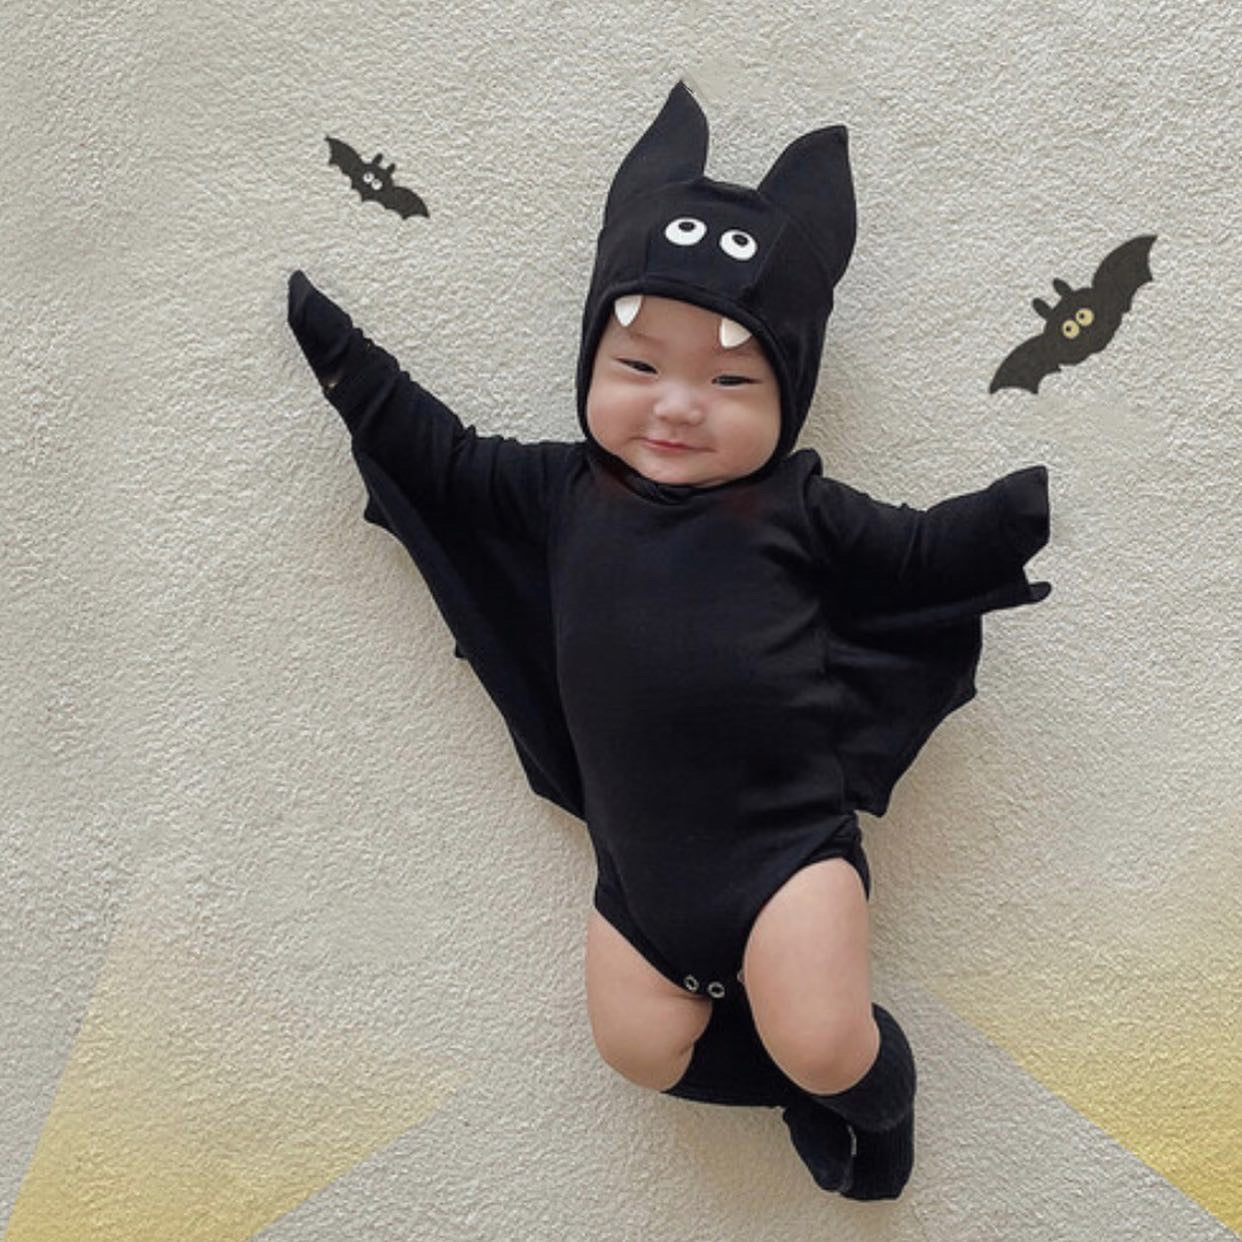 Ikii Batman Costume + Bonnet Set